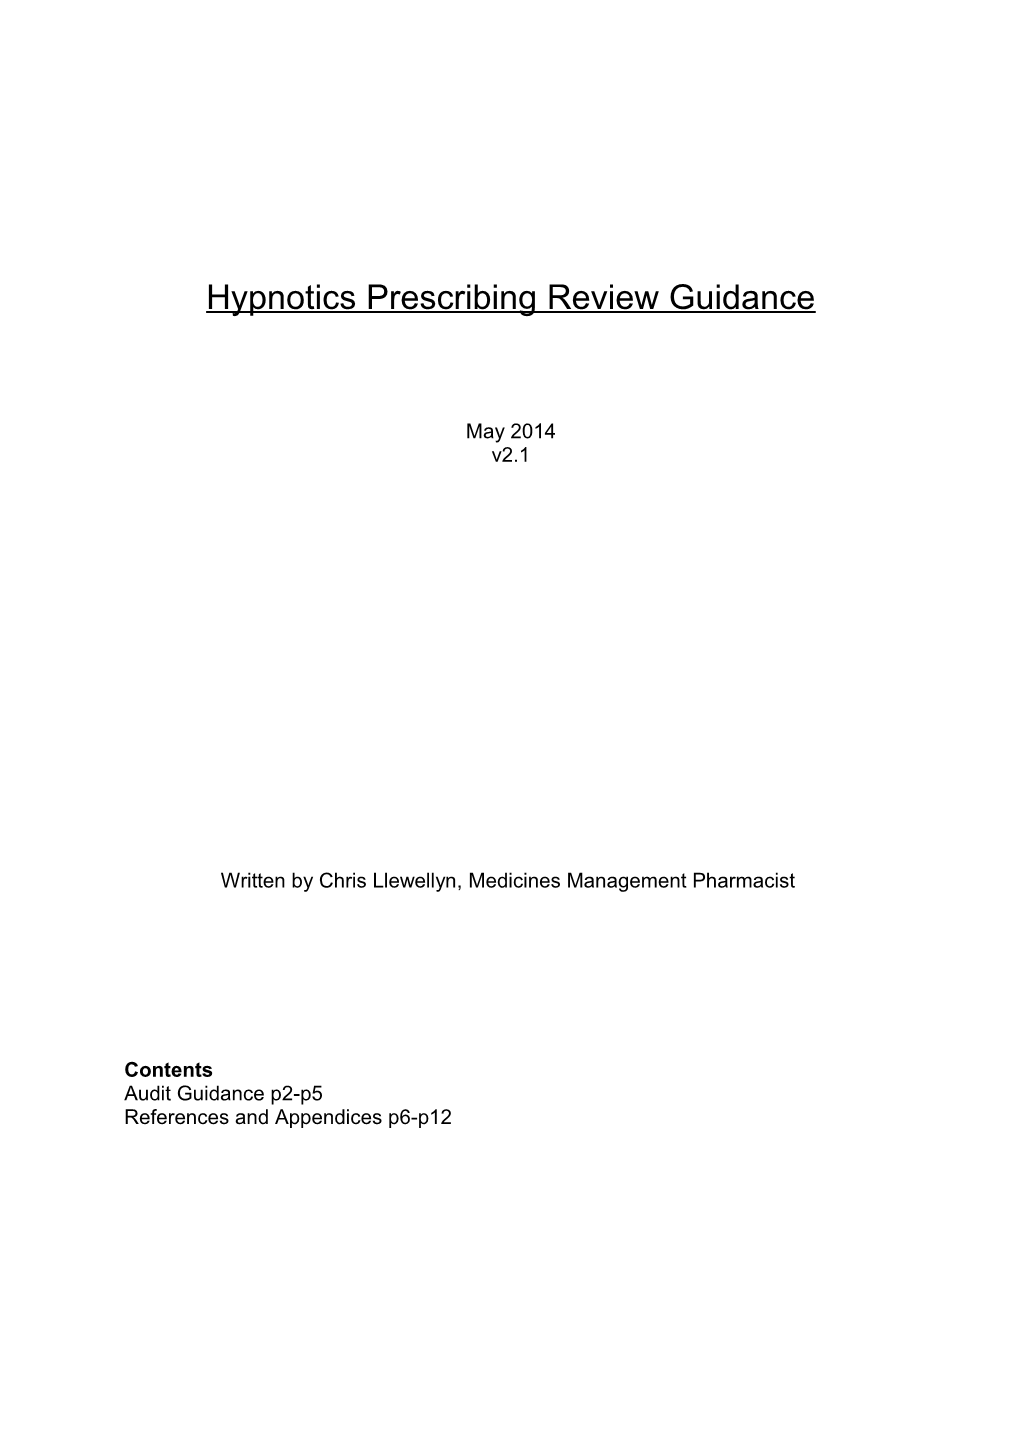 Hypnotics Prescribing Review Guidance